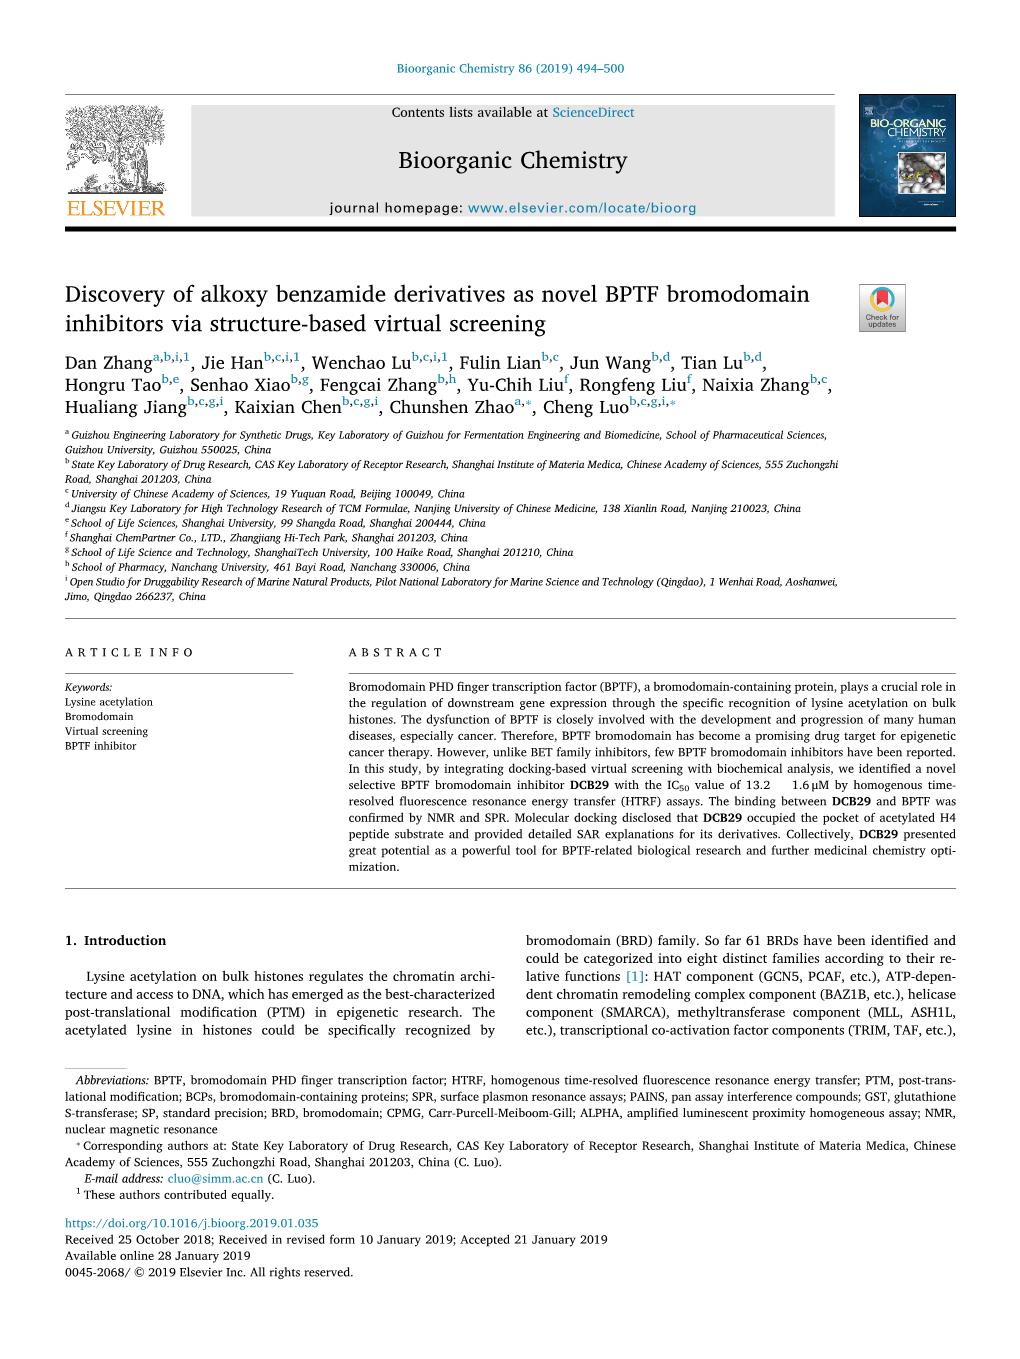 Discovery of Alkoxy Benzamide Derivatives As Novel BPTF